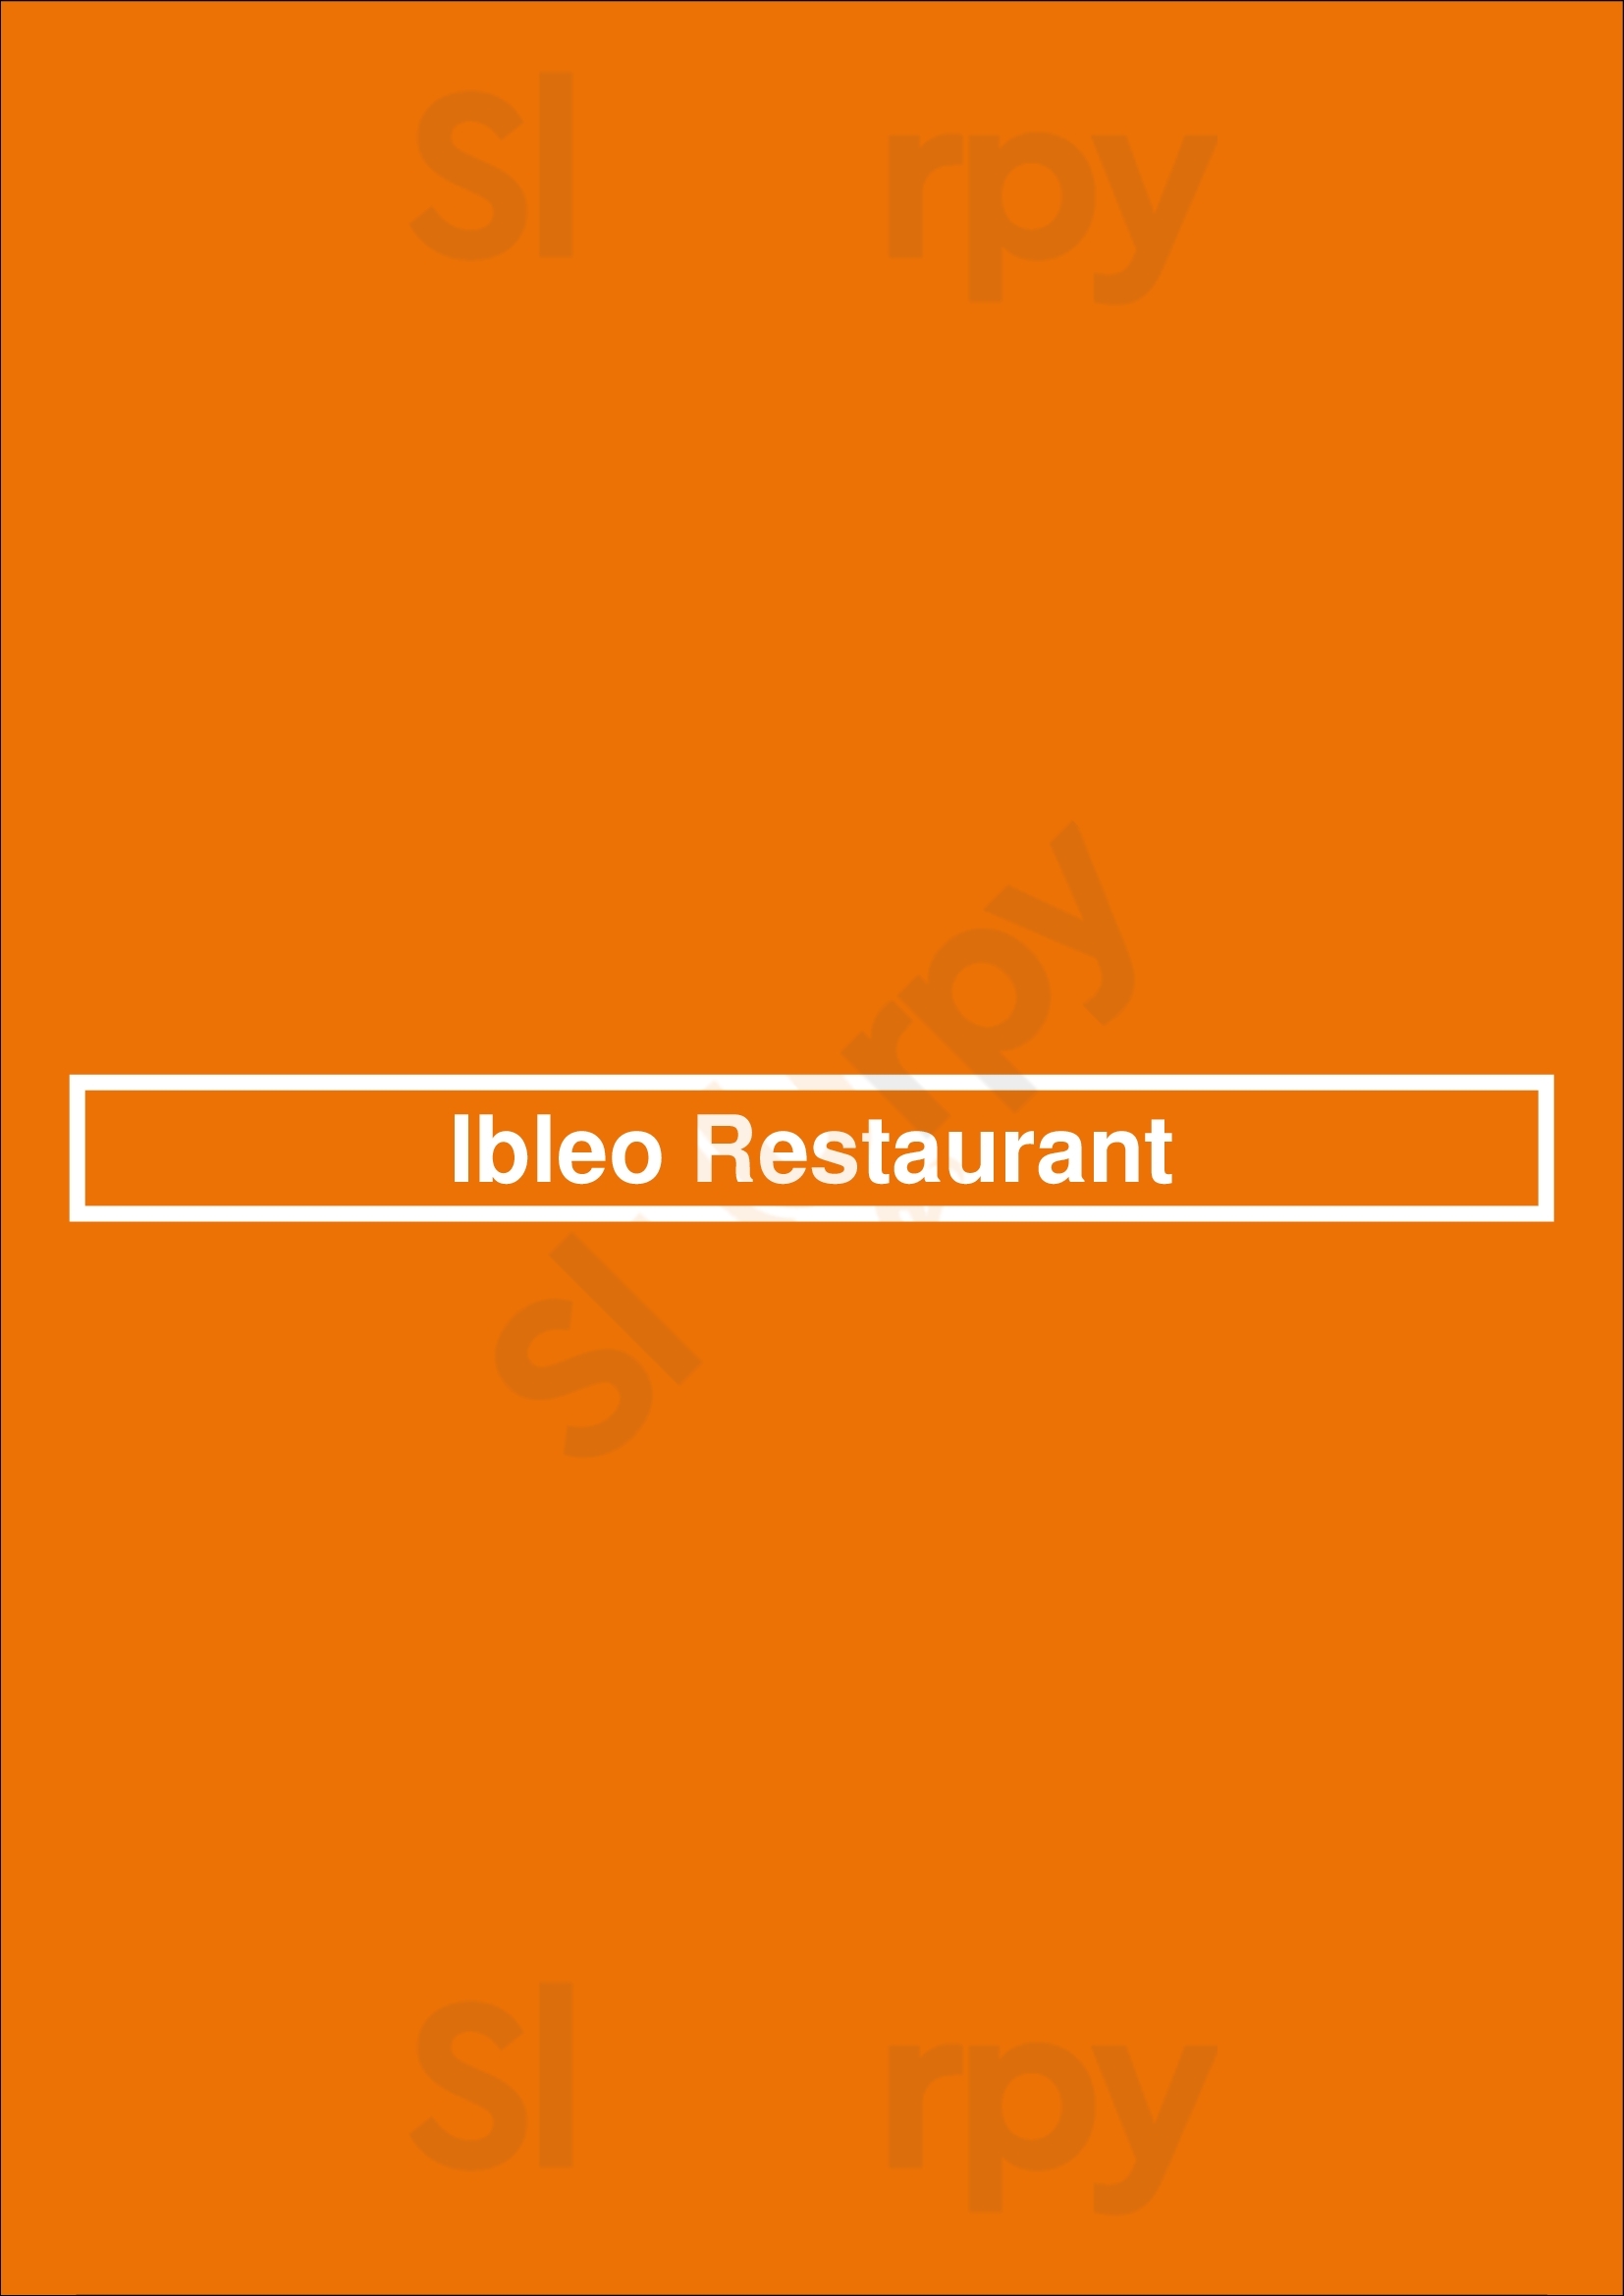 Ibleo Restaurant Chingford Menu - 1